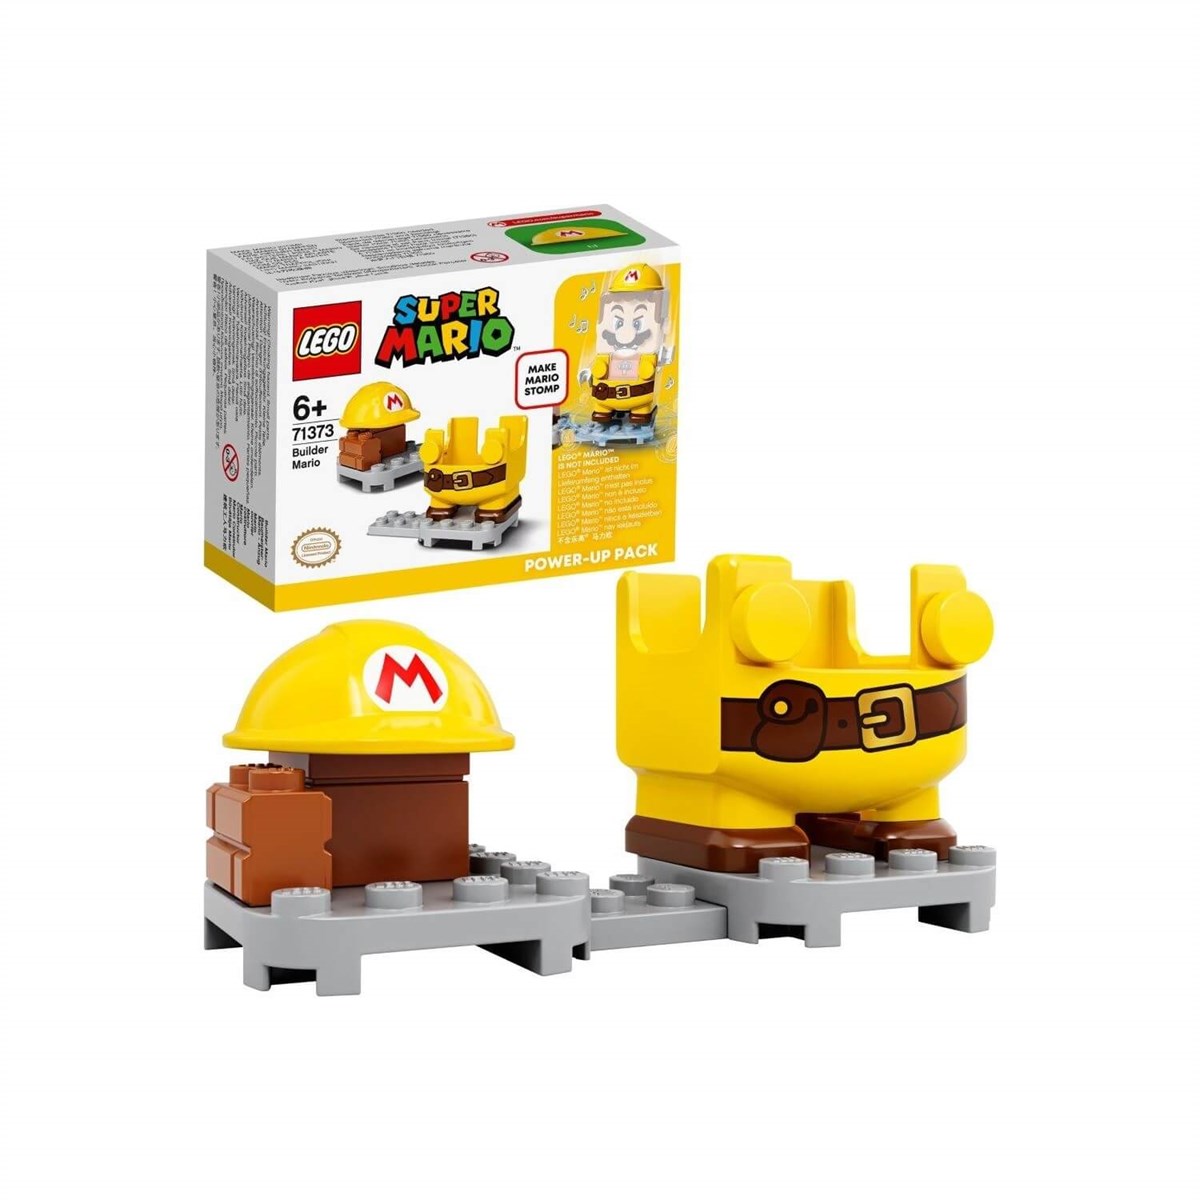 Lego Super Mario 71373 Builder Mario Power-Up Pack konsolkulubu.com